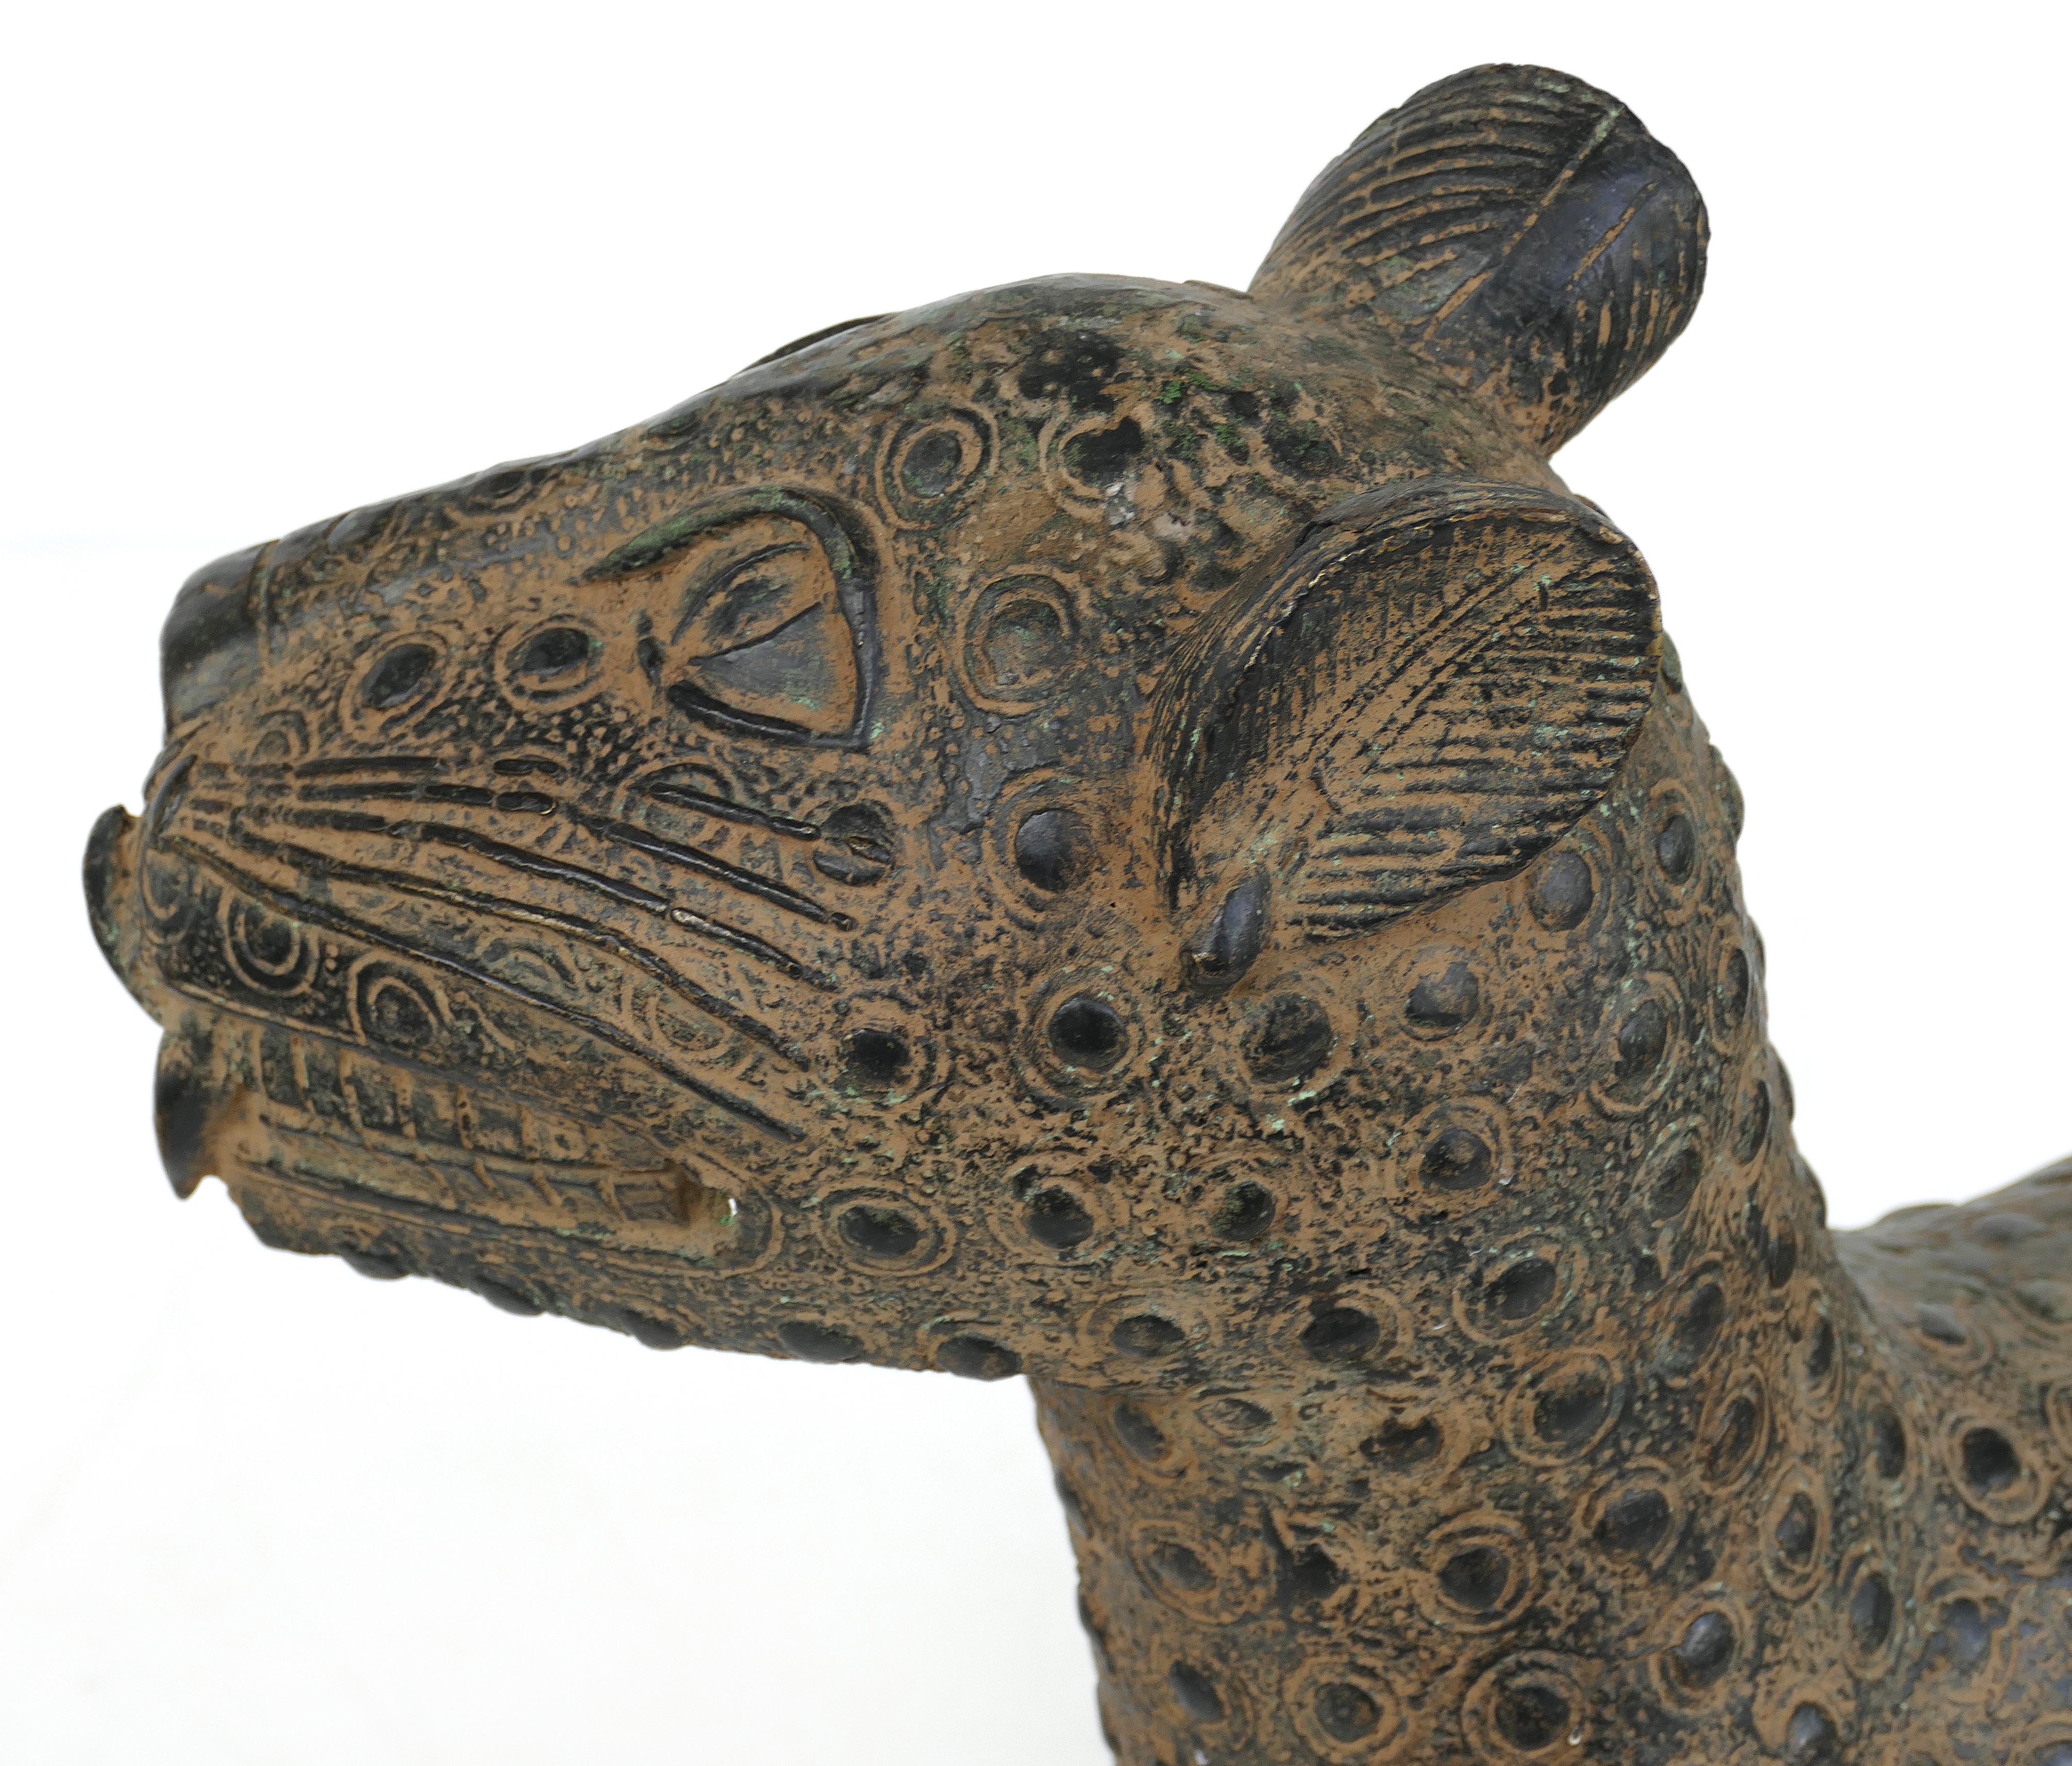 Benin 'Nigeria' Bronze Sculptures of Leopard Cubs, Modern Replicas 2